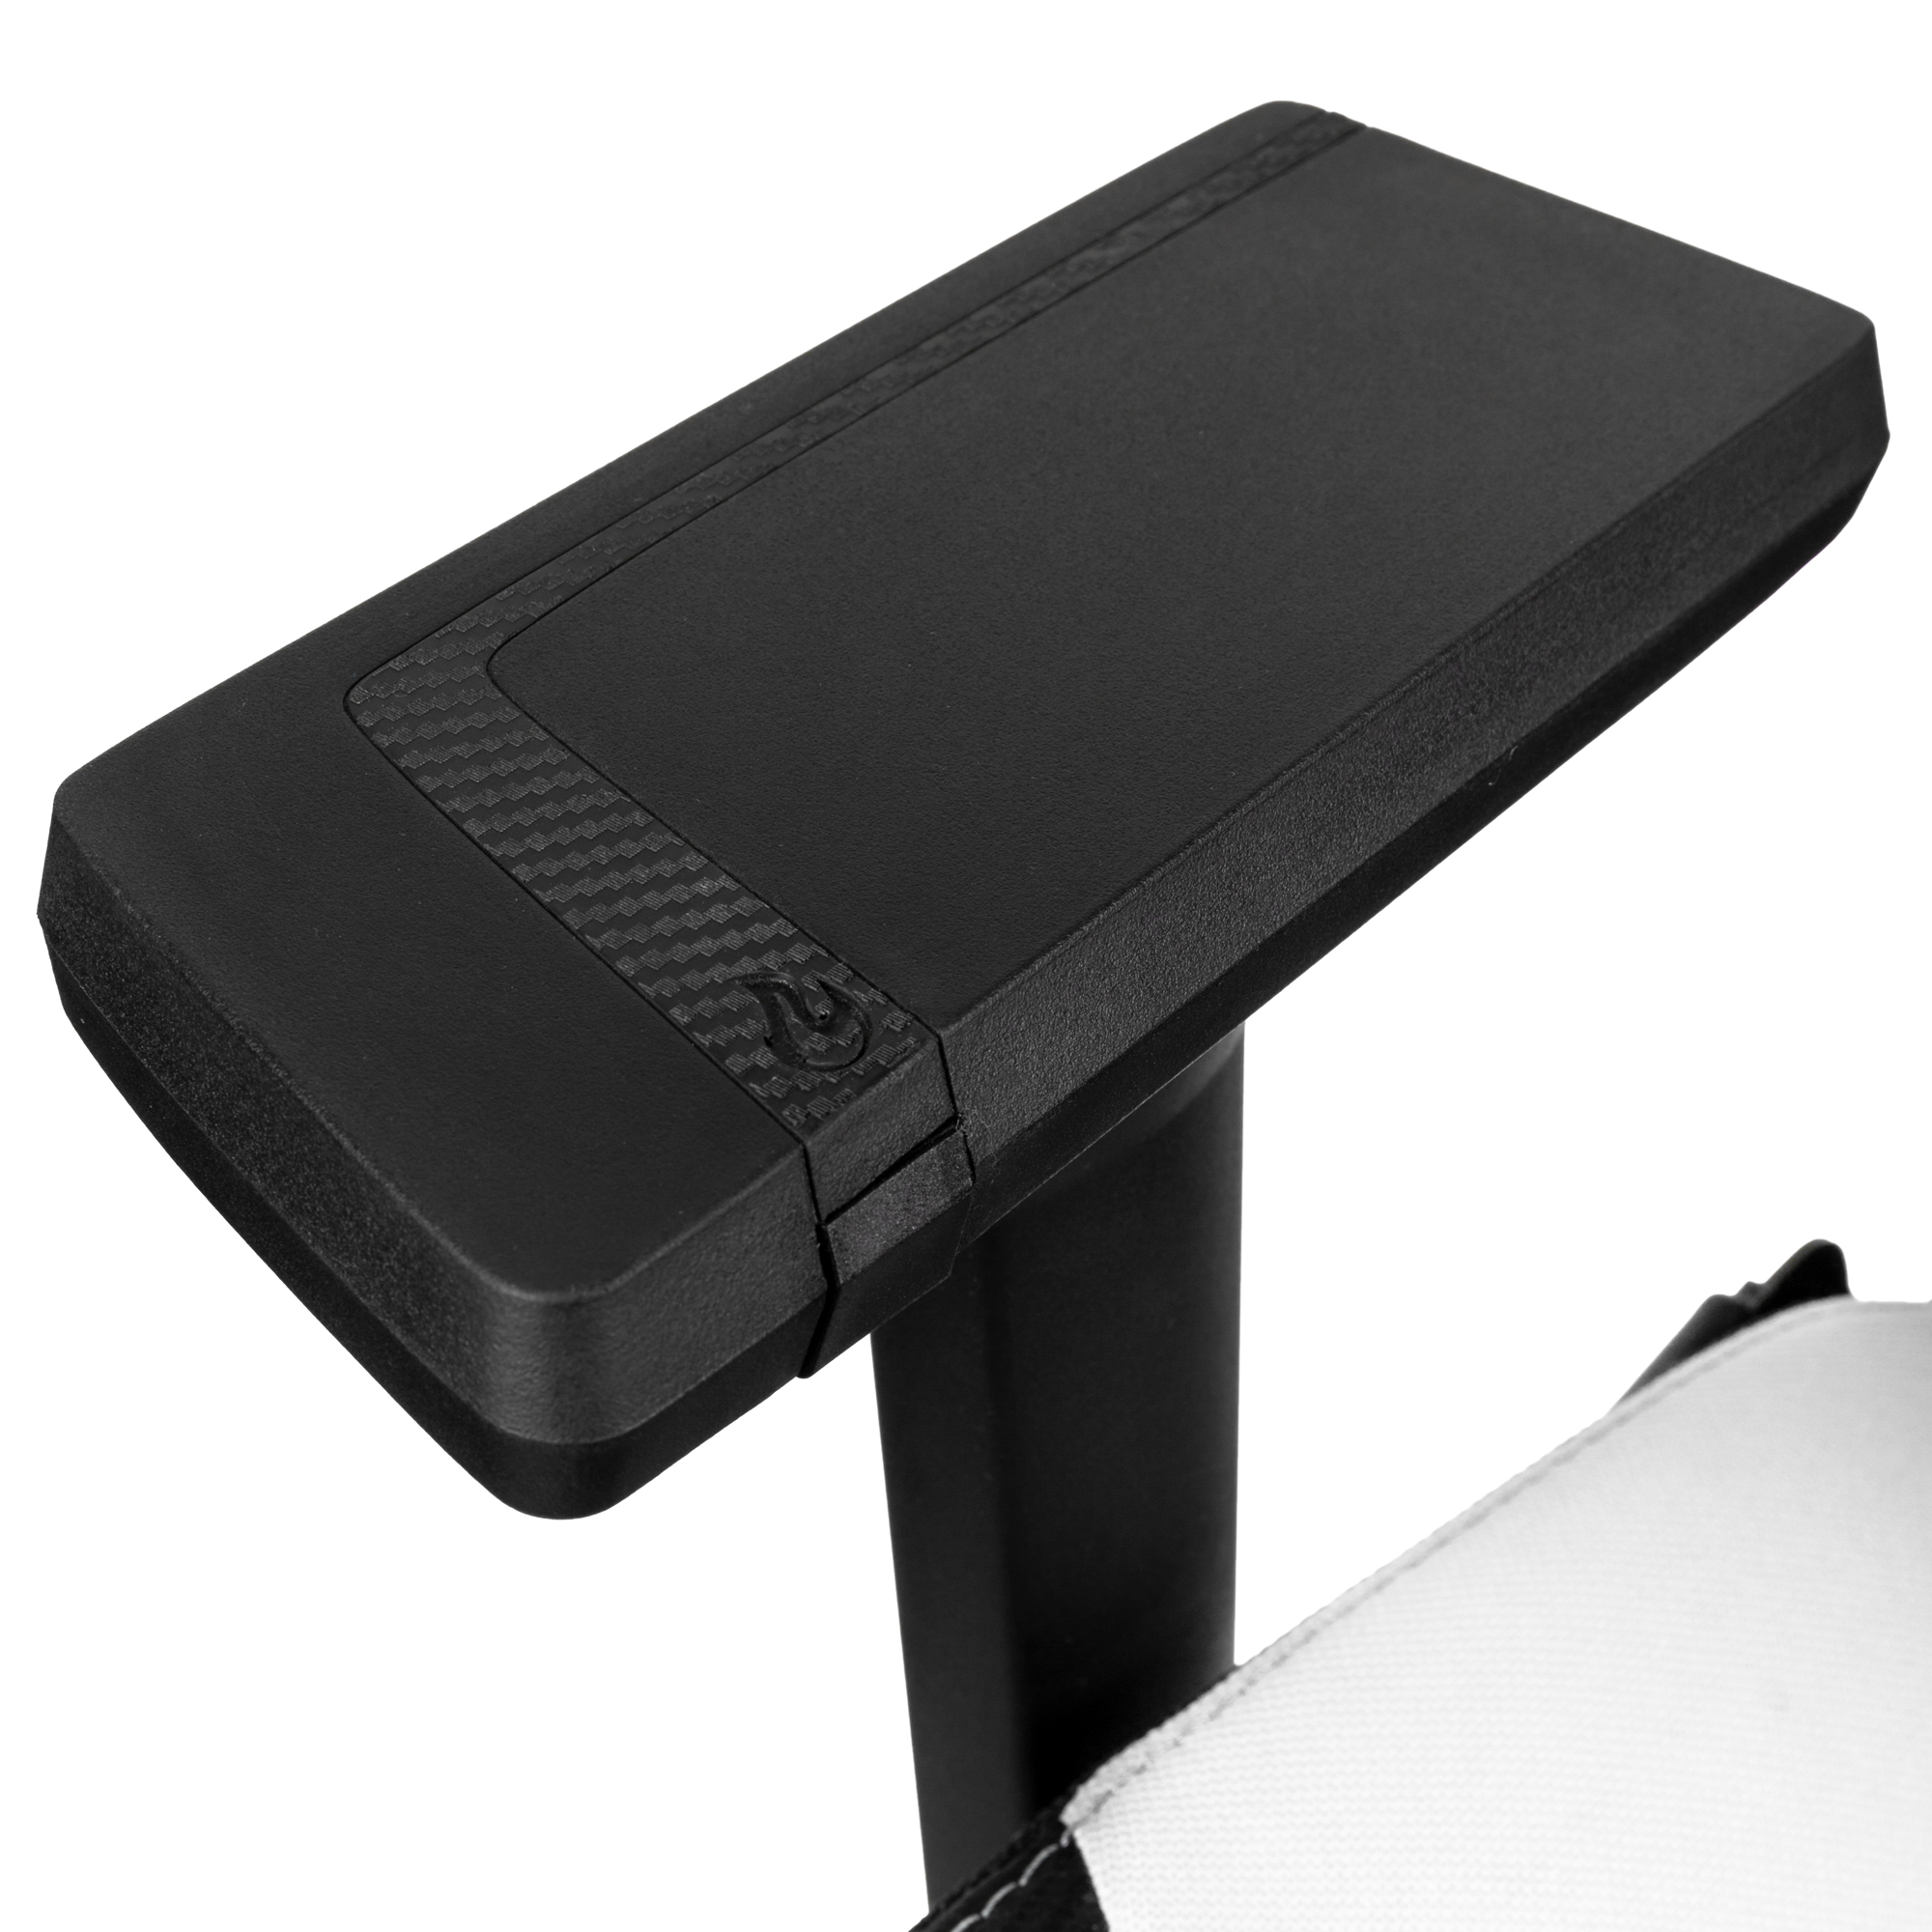 nitro-concepts - X1000 Gaming Chair Black/White